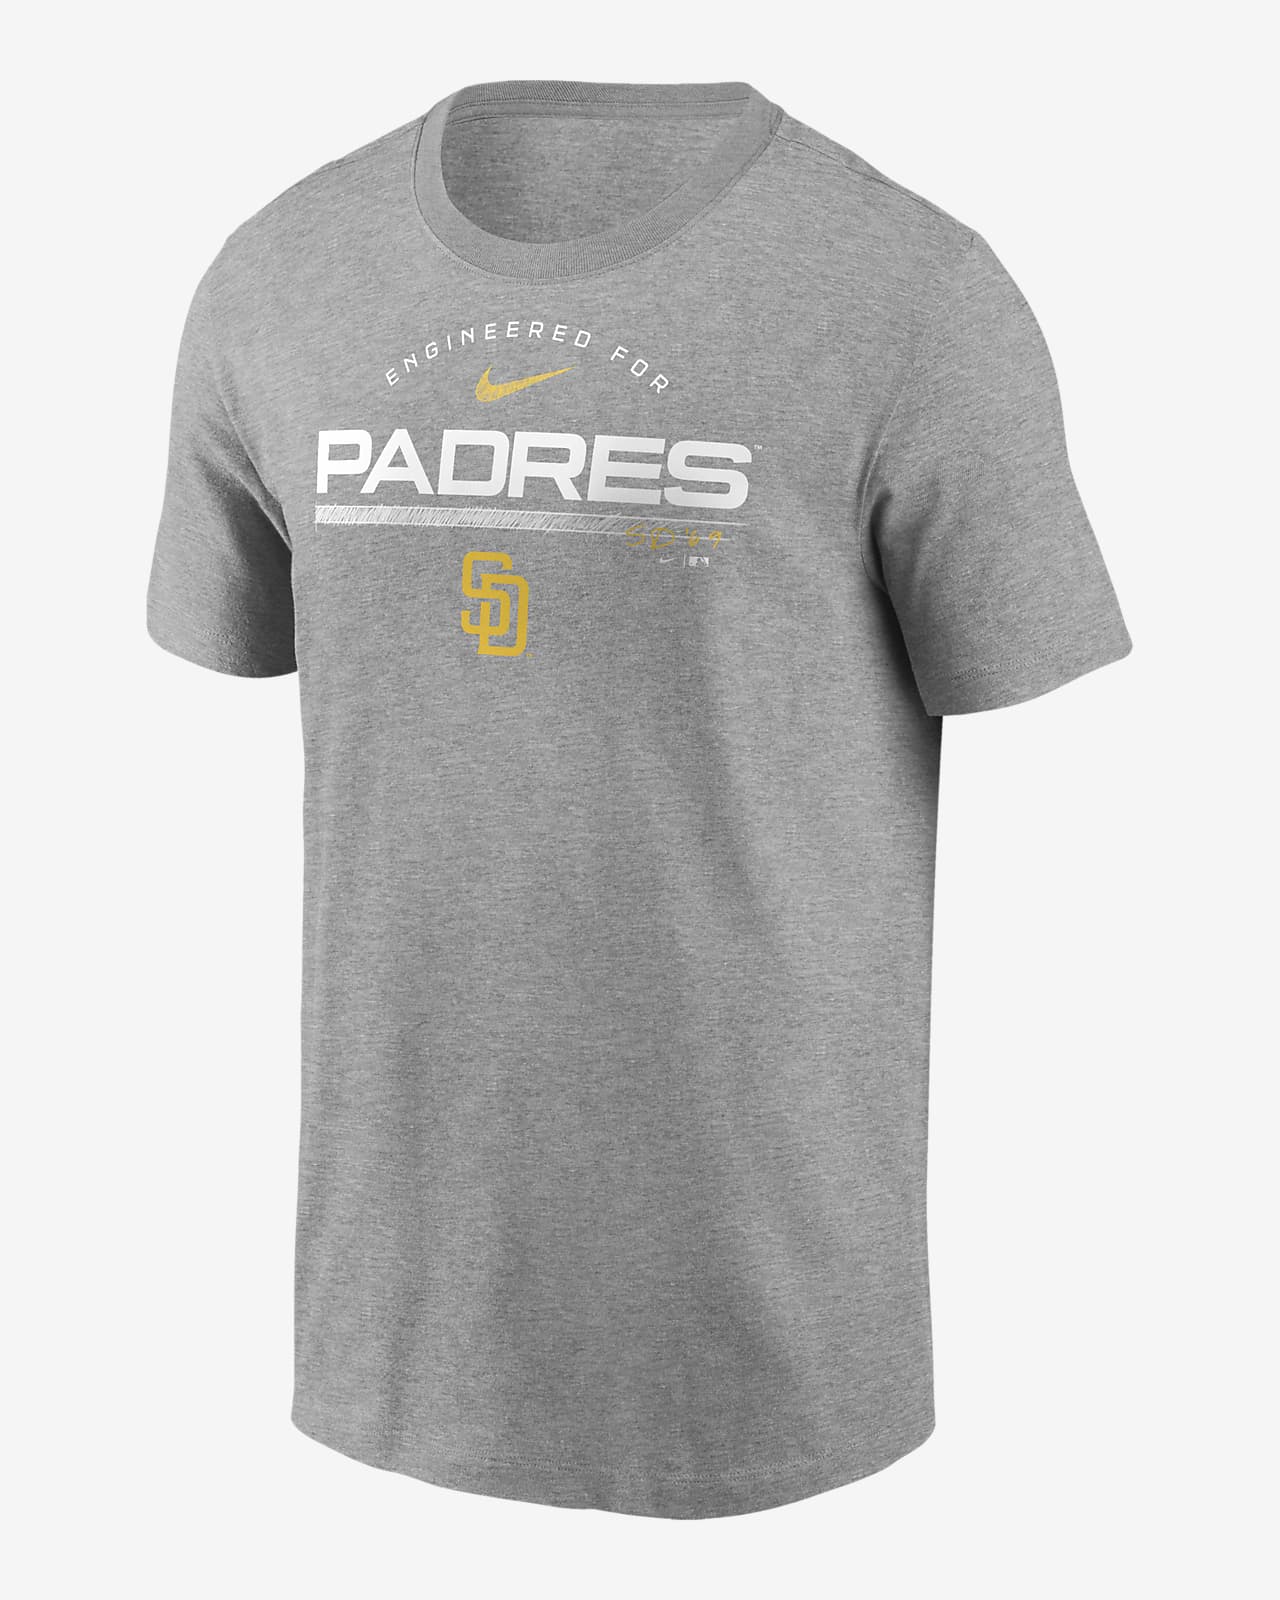 Nike, Shirts, Nike San Diego Padres Mlb Shirt Xxl Drifit Brown Gold  Engineered Baseball